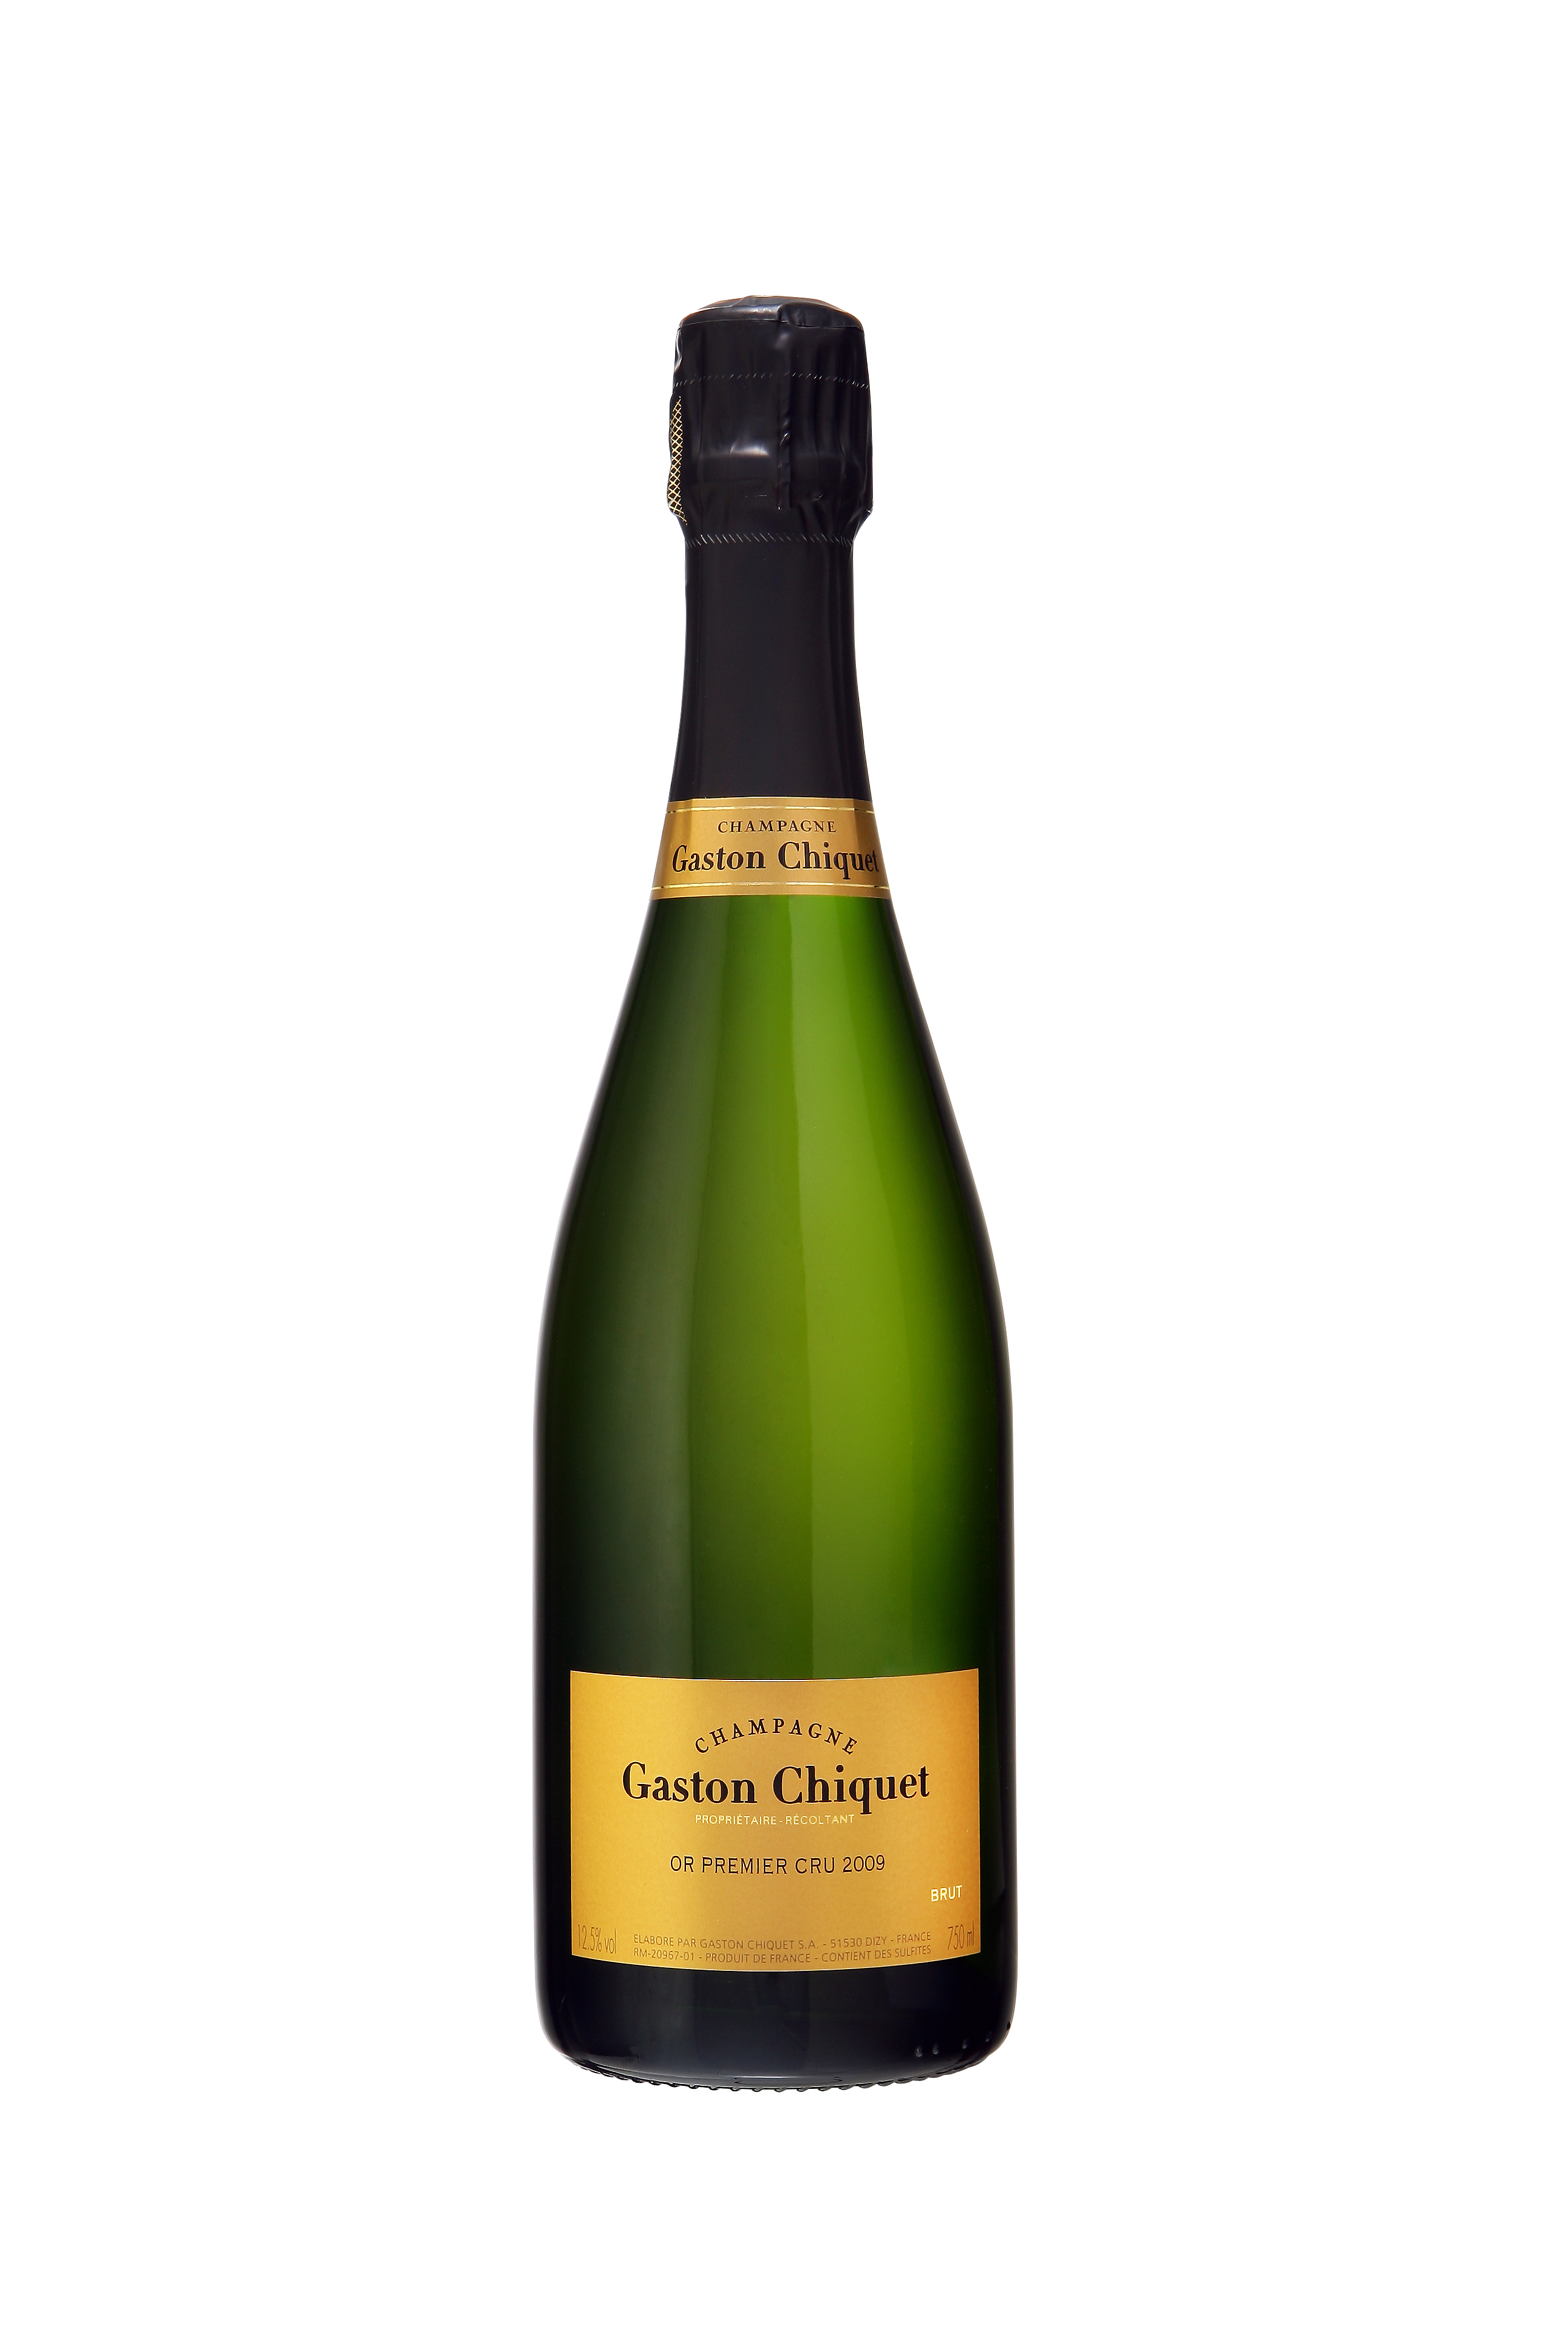 Vintage Champagne Brut, Gaston Chiquet - Skurnik Wines & Spirits